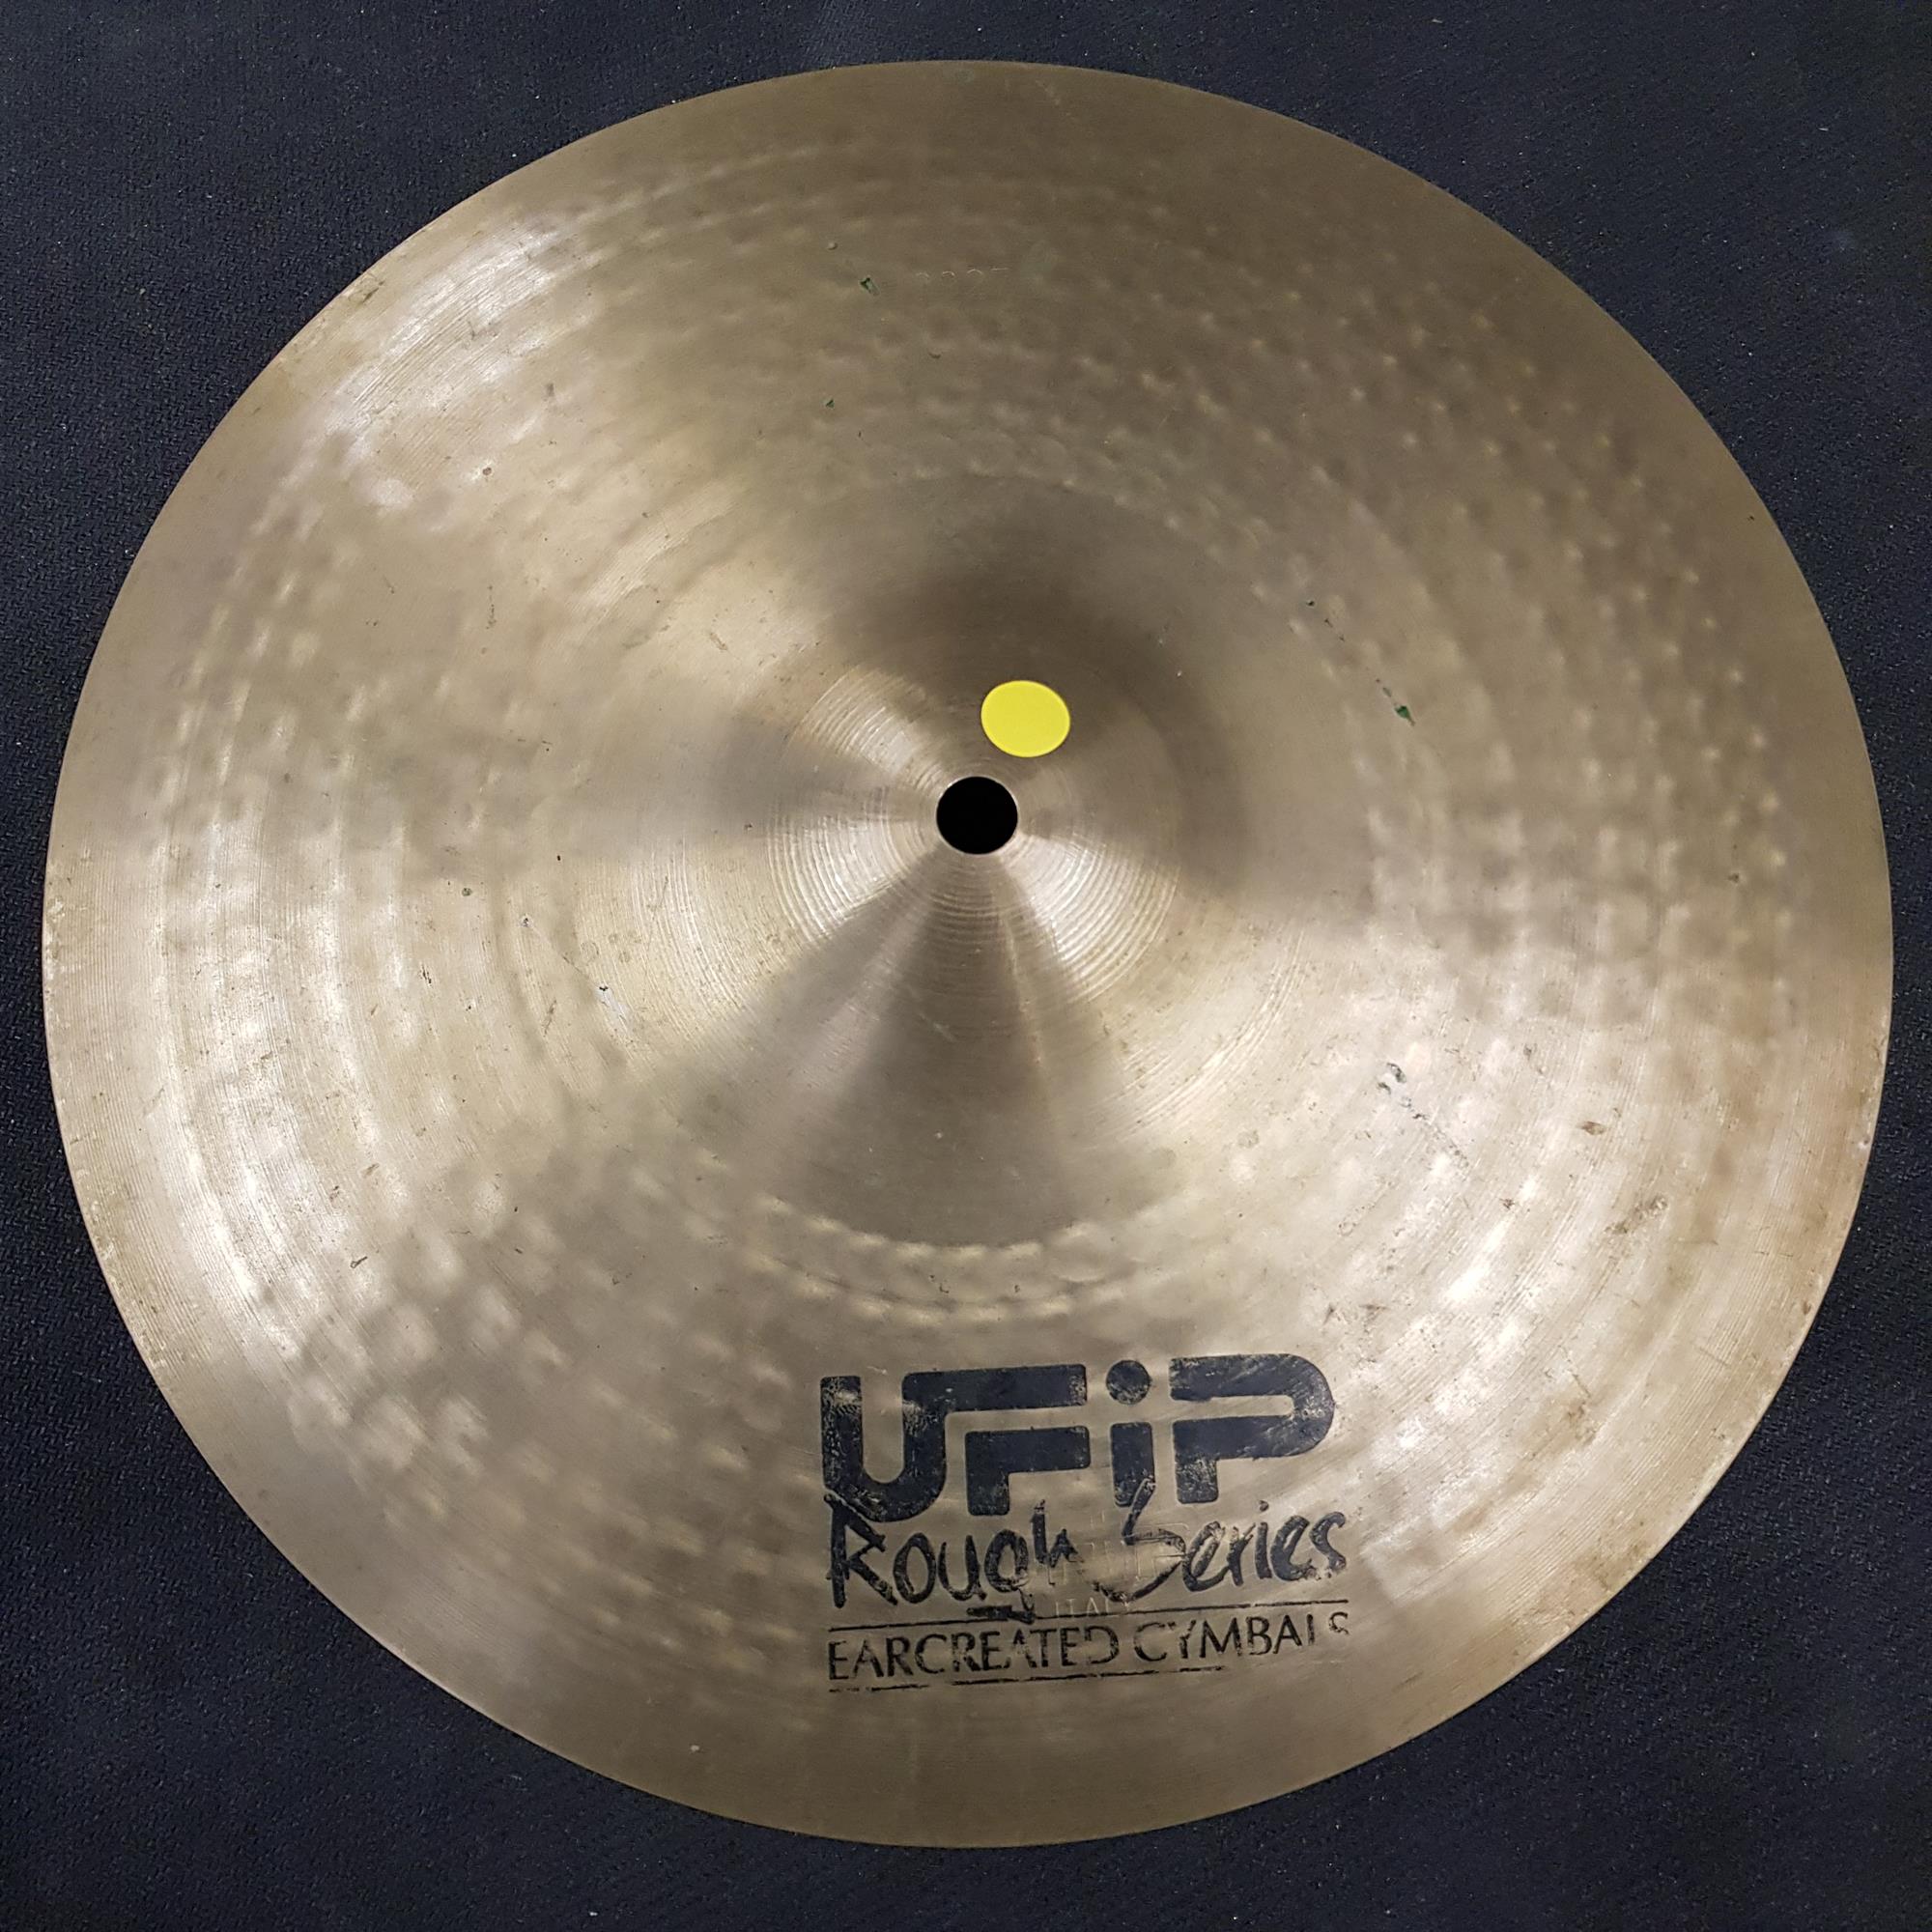 UFIP ROUGH SPLASH 12 - Batterie / Percussioni Piatti - Splash